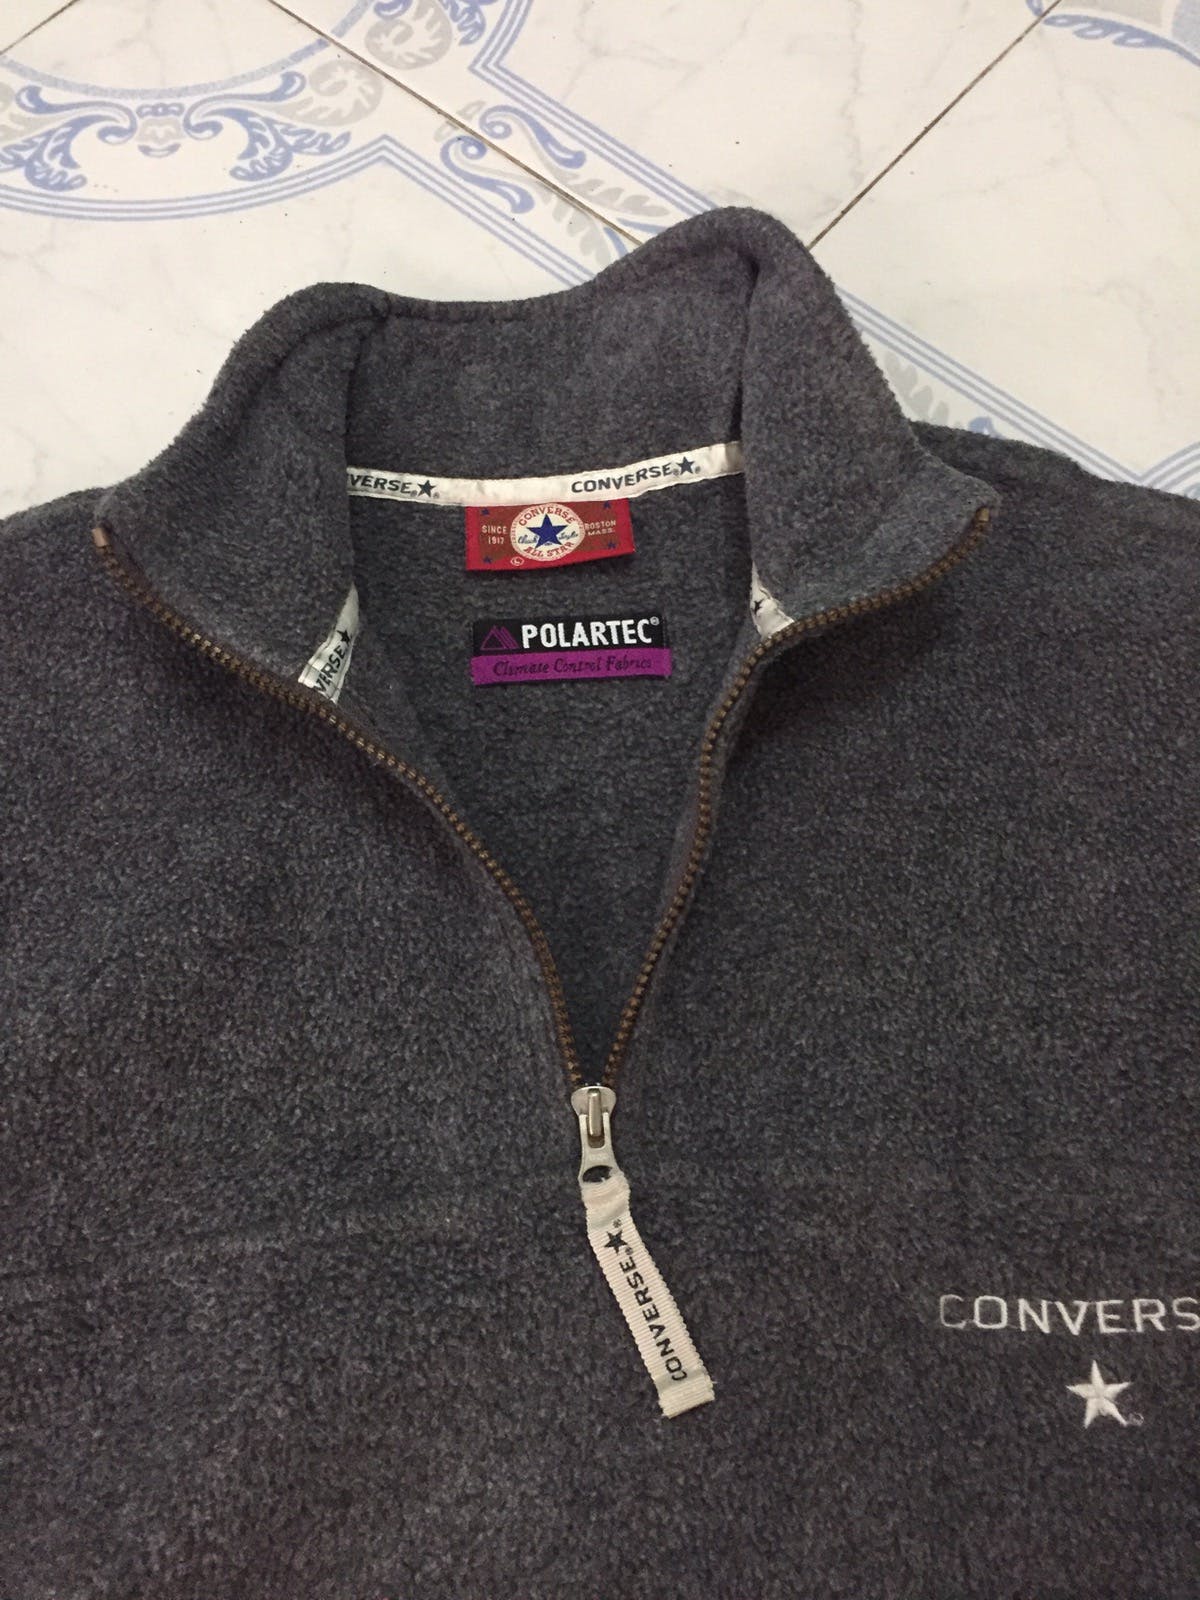 Converse All Star X Polartec Half Zip Sweater - 11